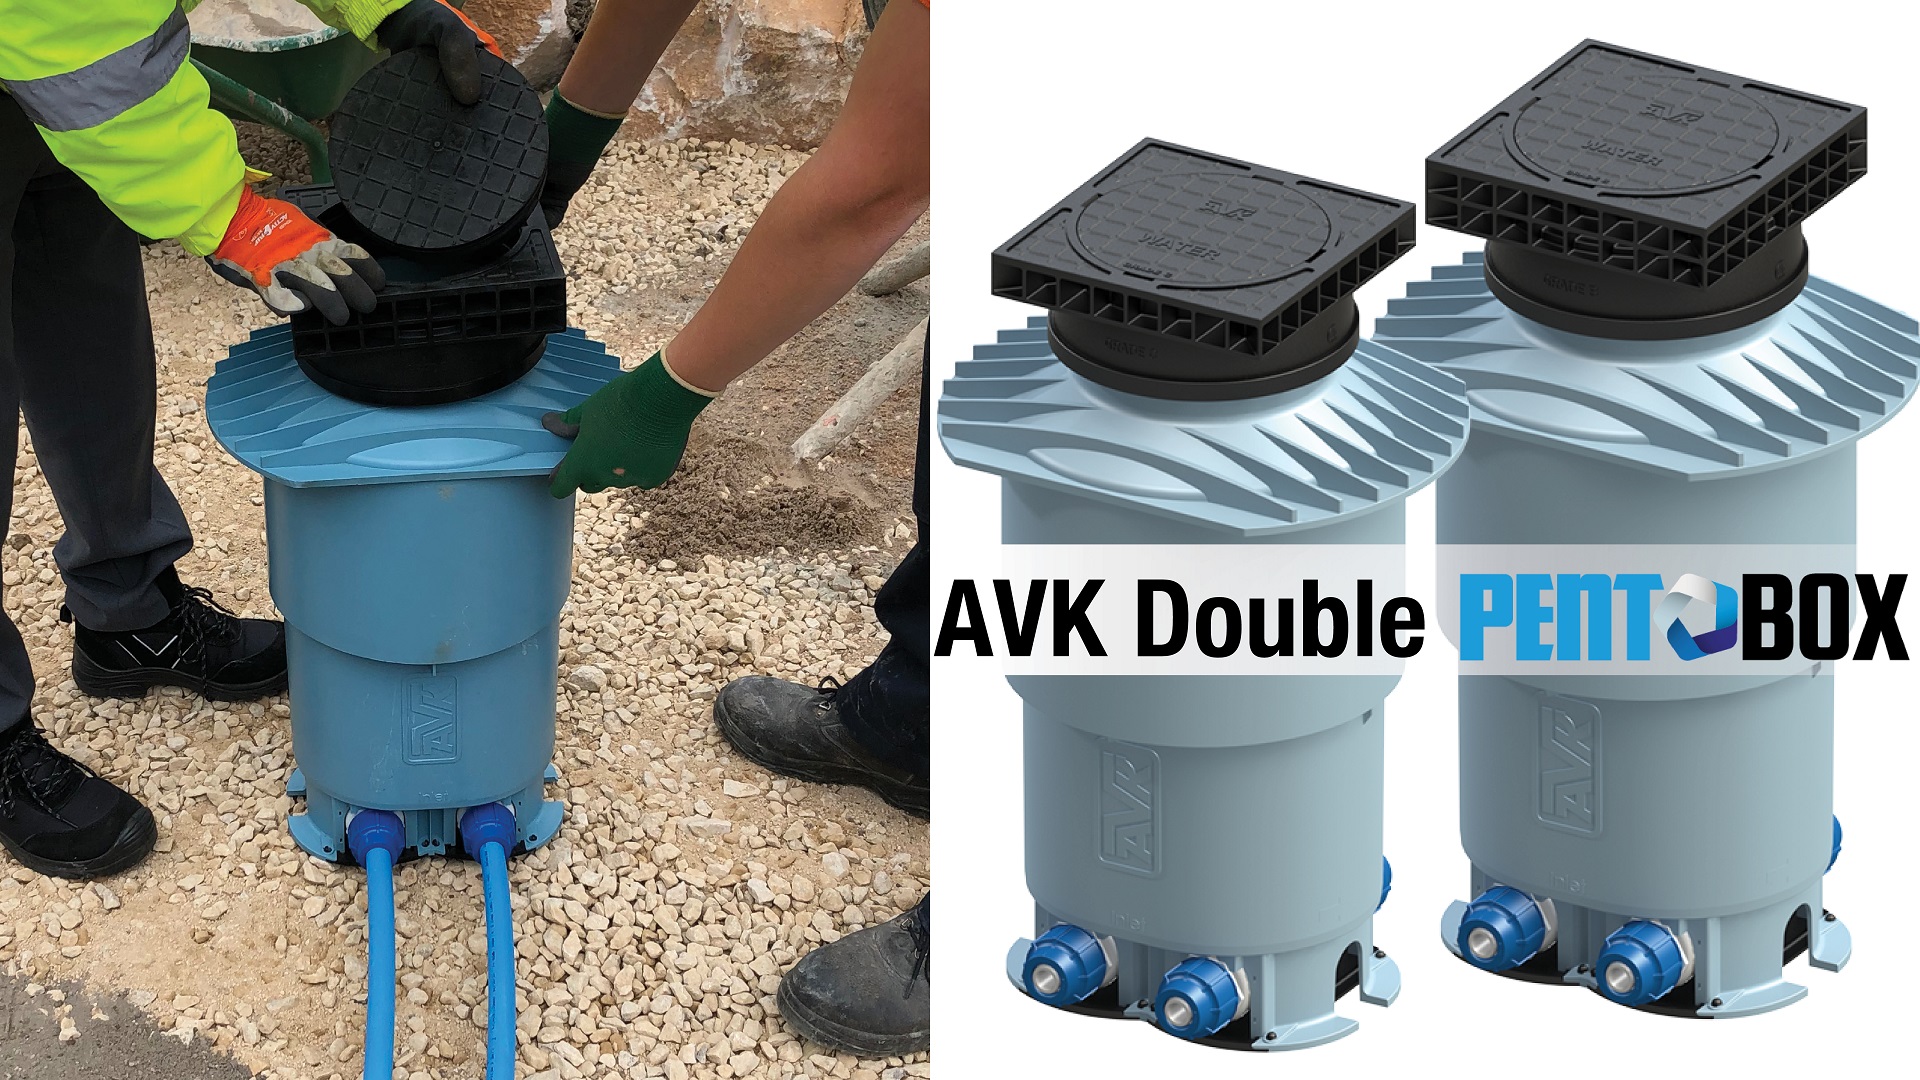 AVK Double Pentobox Water mains to meter